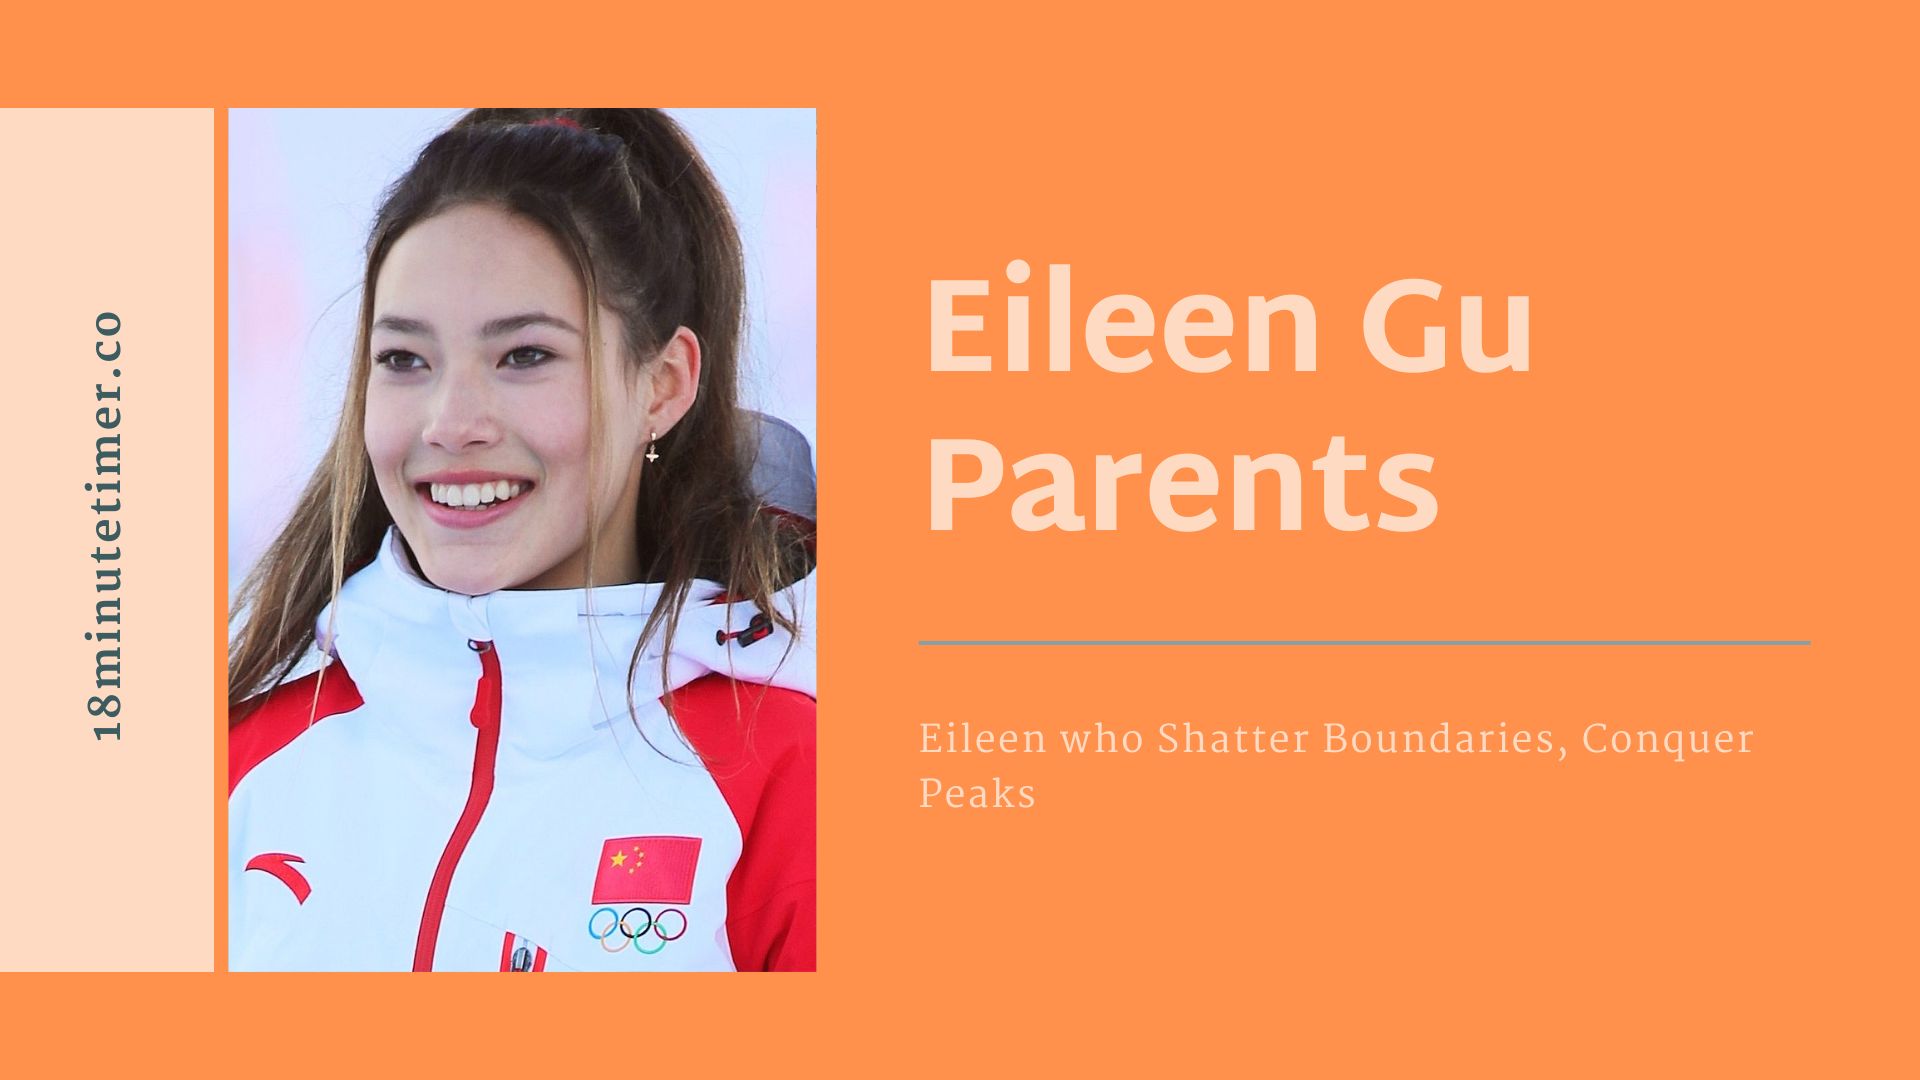 Eileen Gu Parents